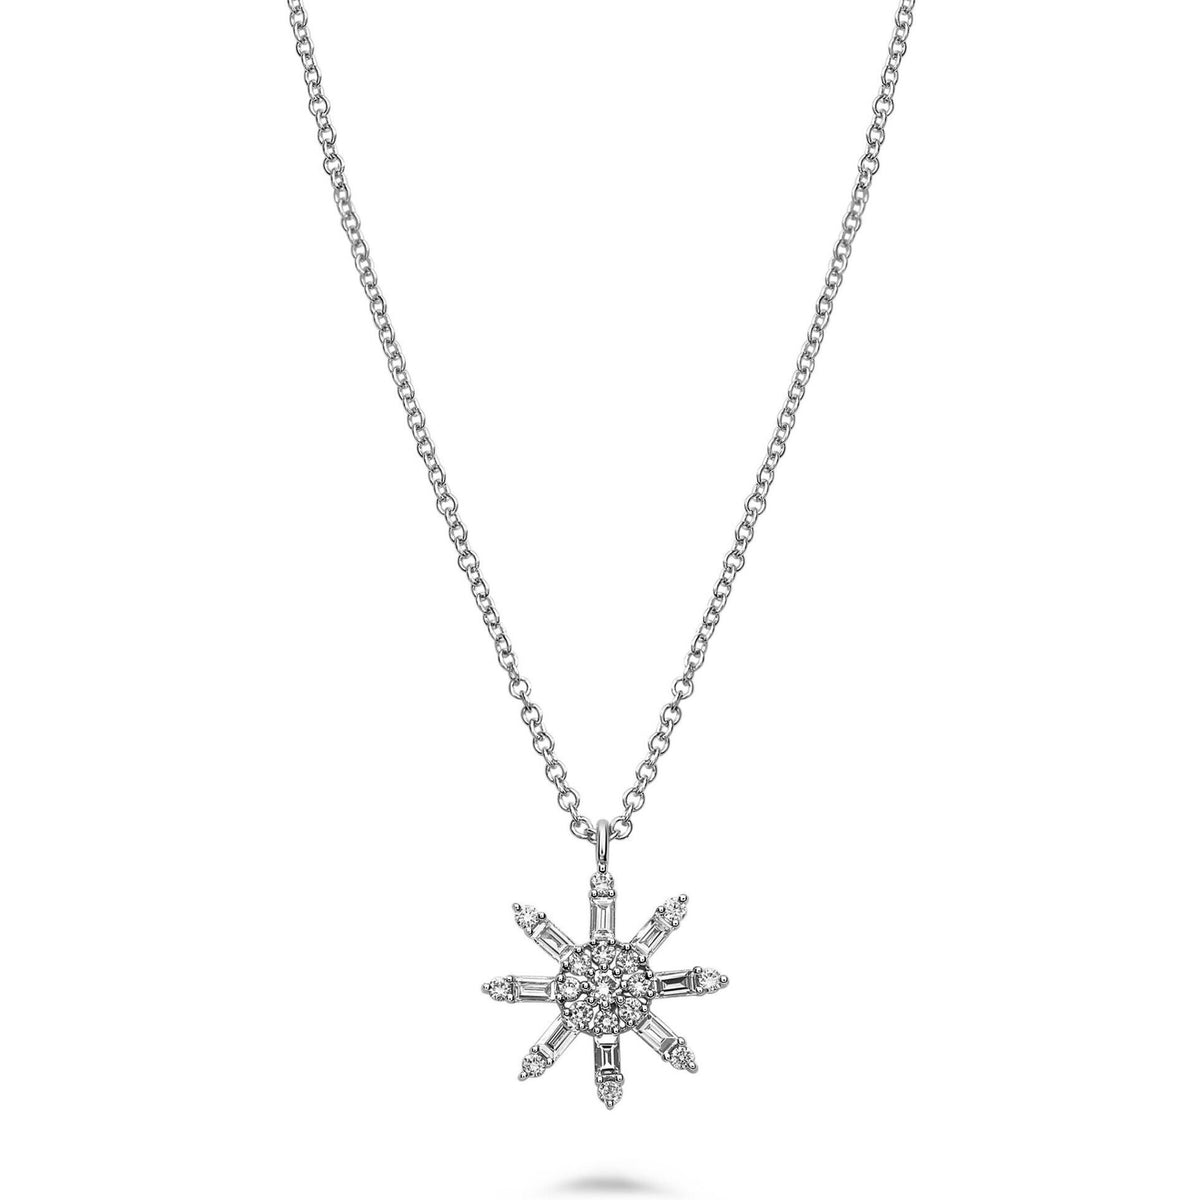 Roman & Jules 14K White Gold Diamond Snowflake Necklace - 0.28 Carat Total Diamond Weight